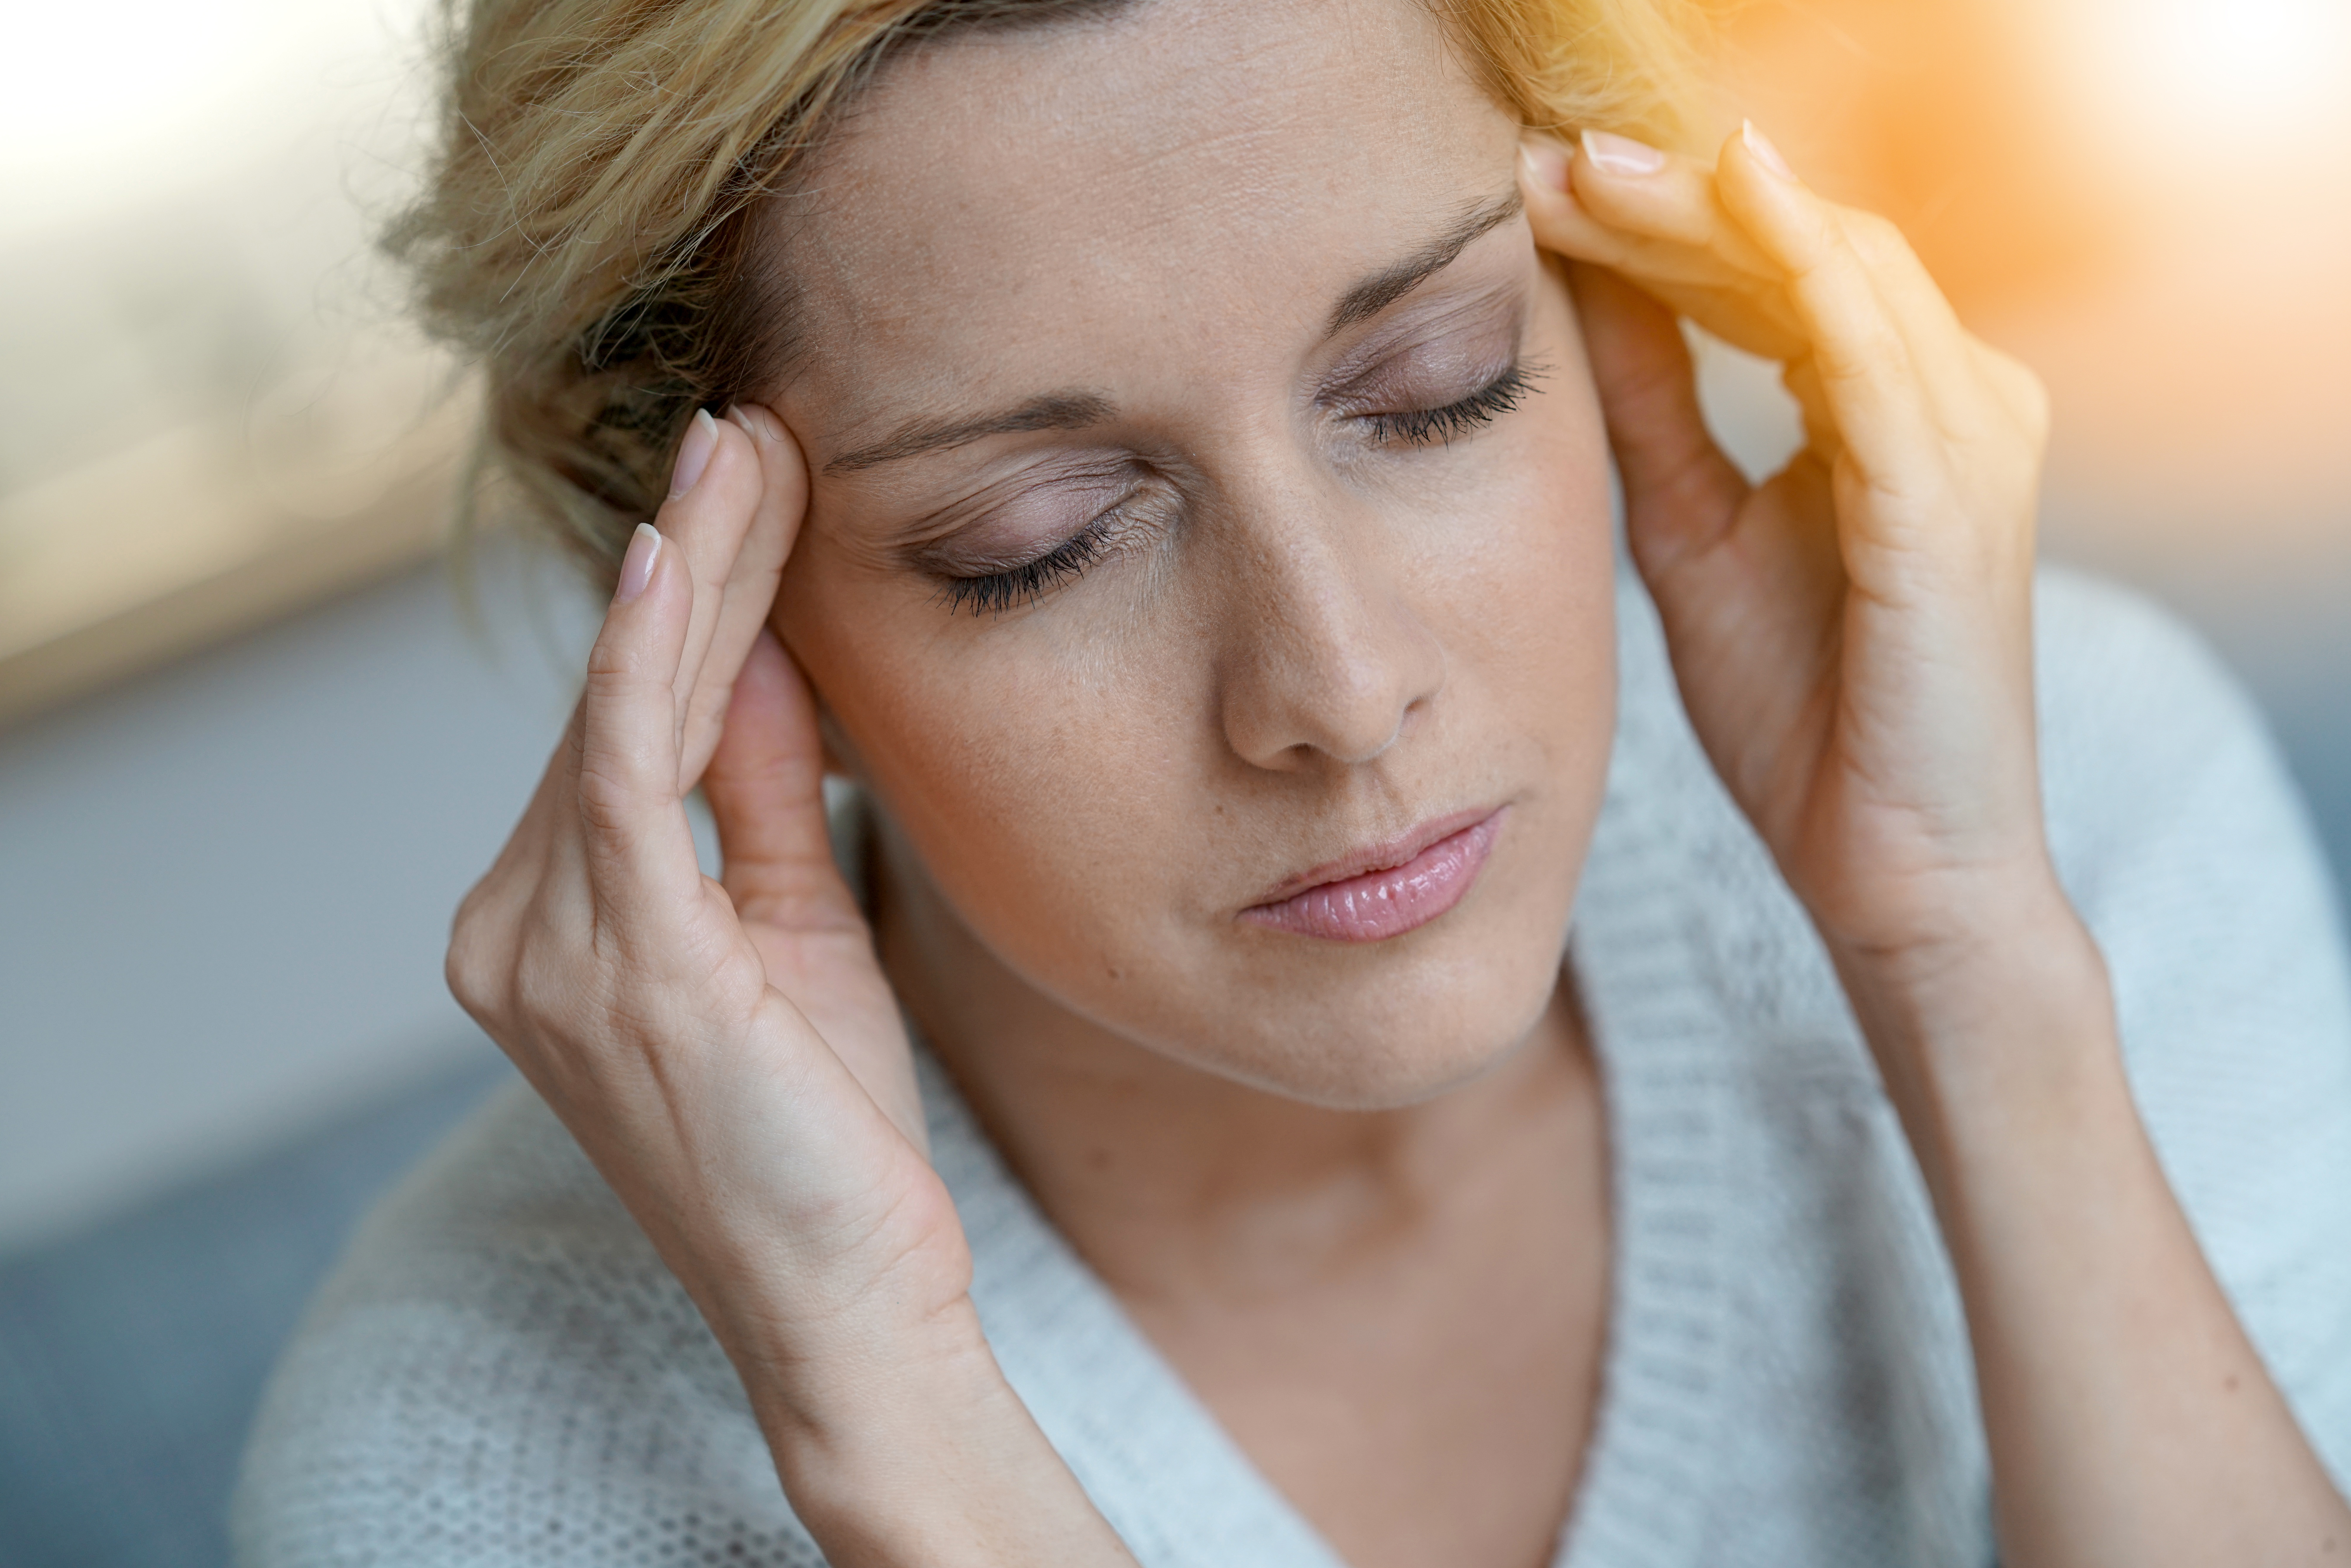 Portrait of middle-aged blond woman having a migraine